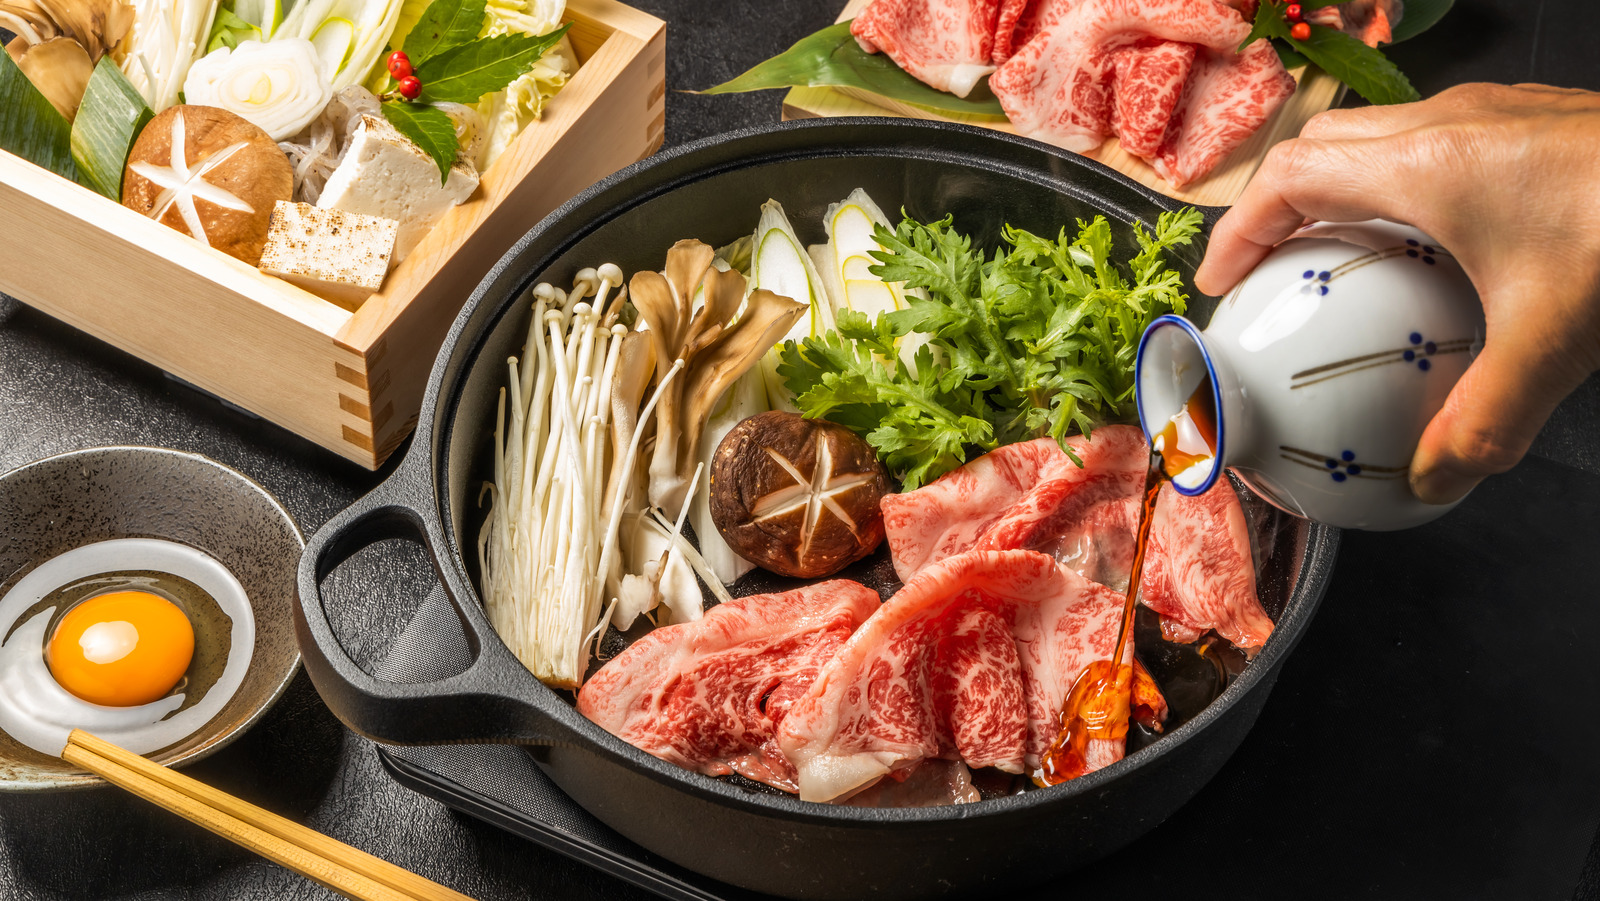 https://www.tastingtable.com/img/gallery/the-difference-between-sukiyaki-and-shabu-shabu-hot-pots/l-intro-1688678470.jpg